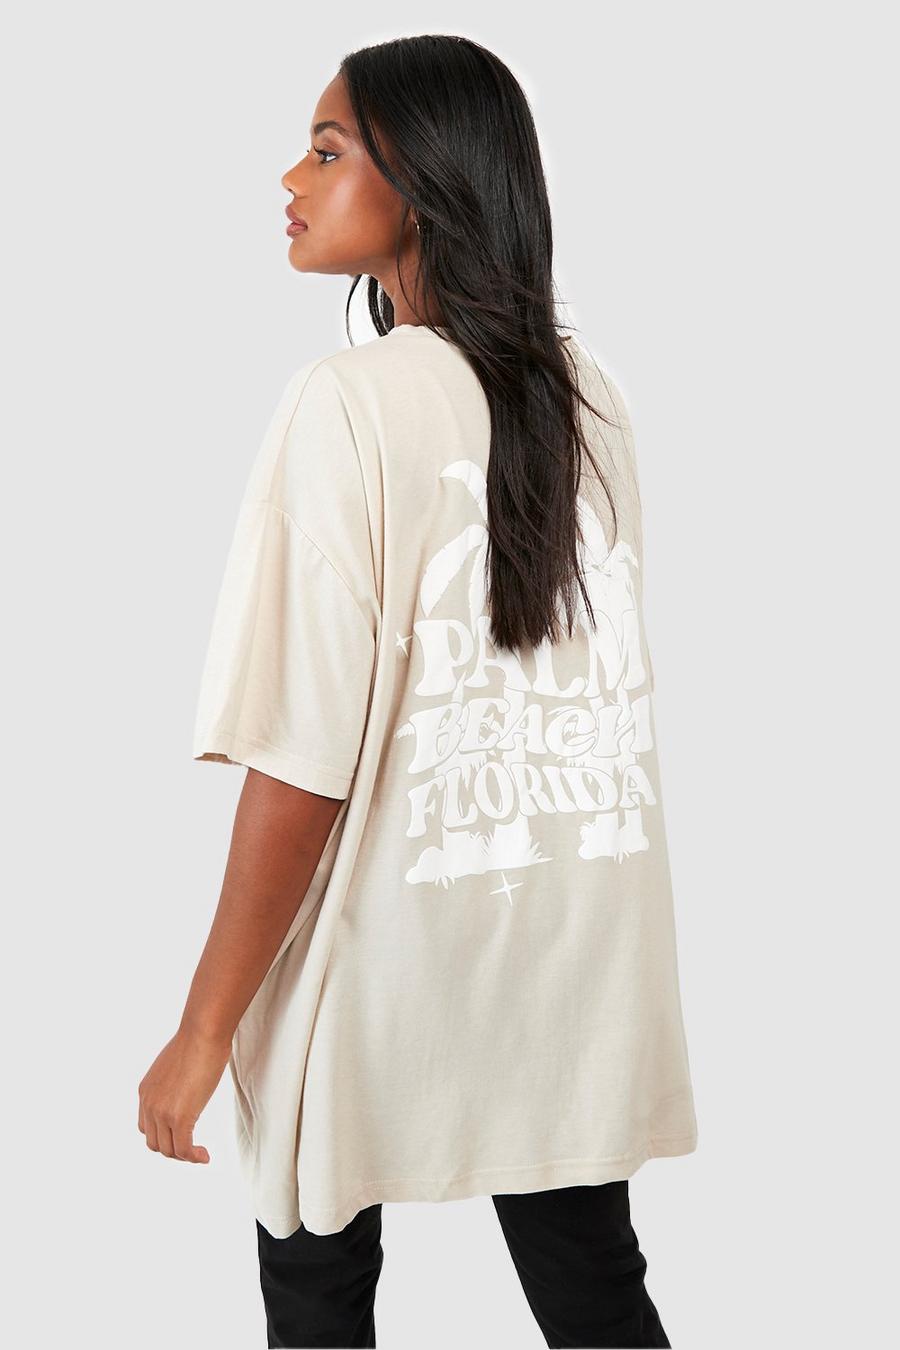 Stone Palm Beach Oversize t-shirt med tryck på ryggen